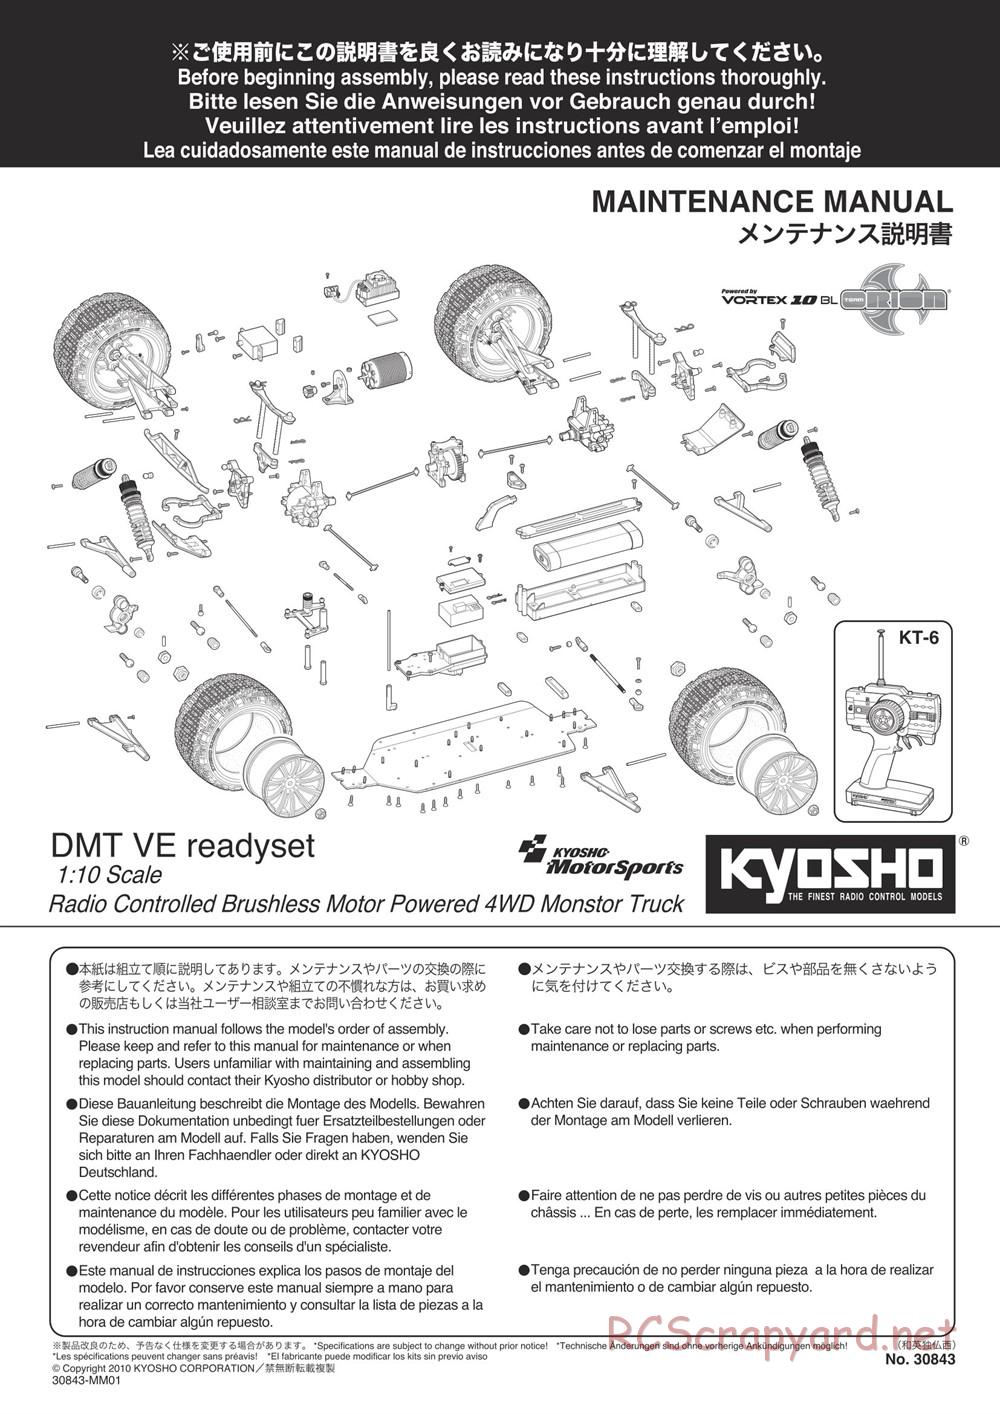 Kyosho - DMT-VE - Manual - Page 1